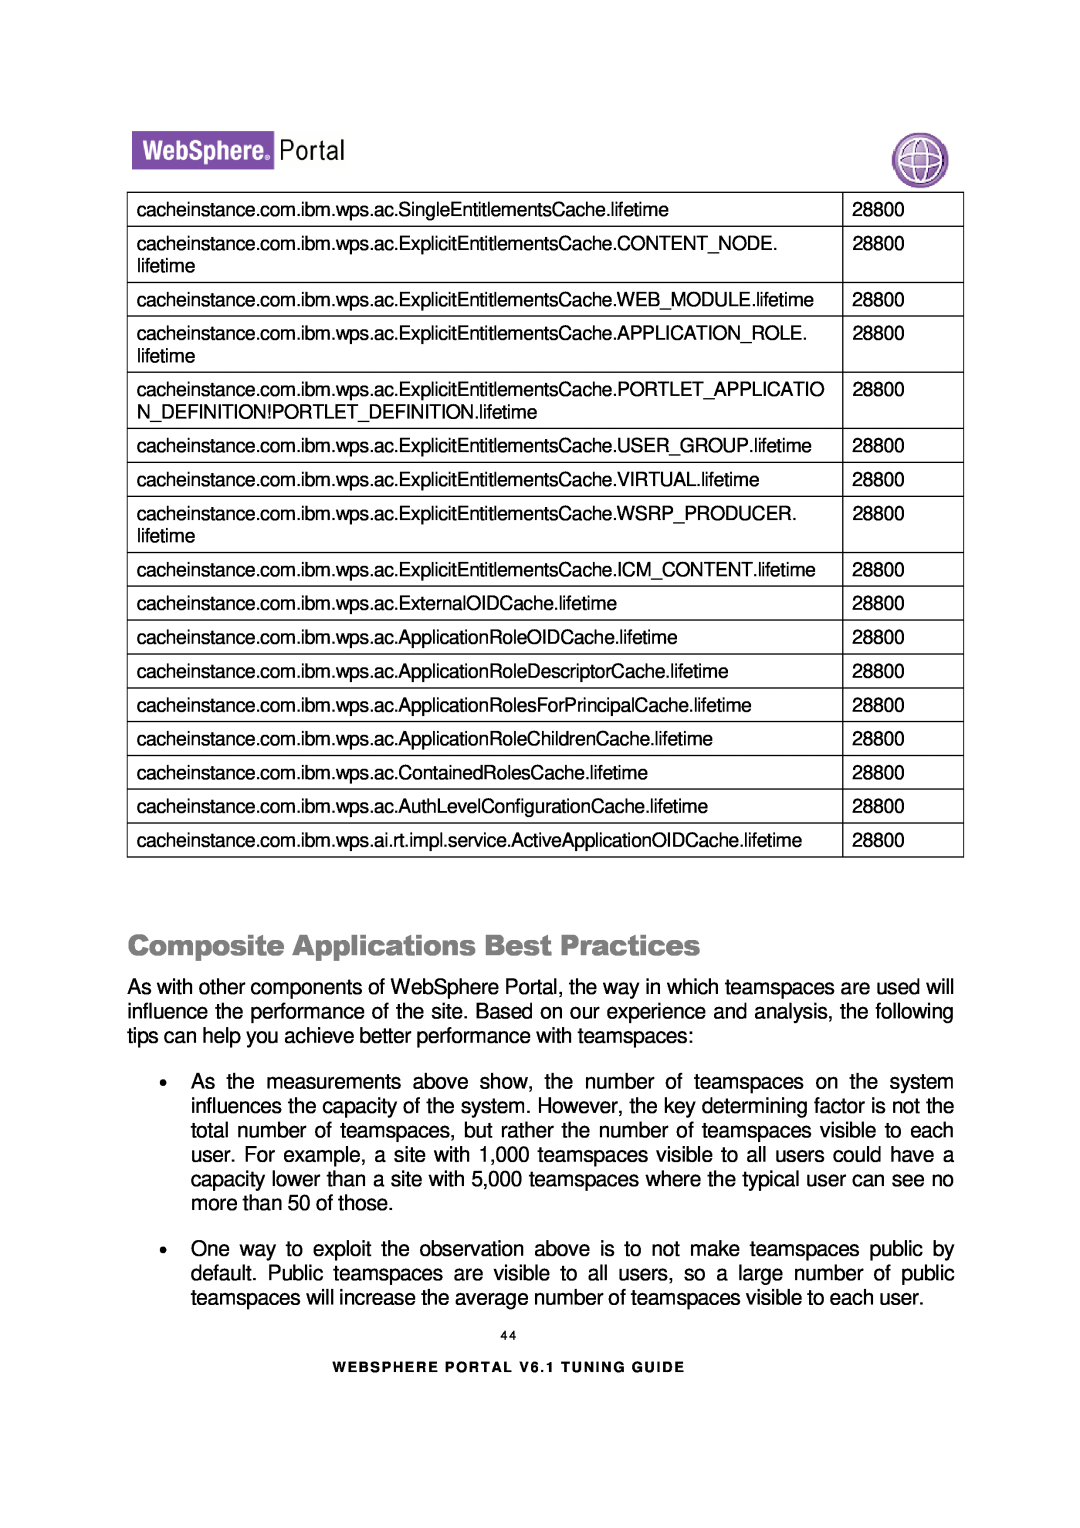 IBM 6.1.X manual Composite Applications Best Practices 